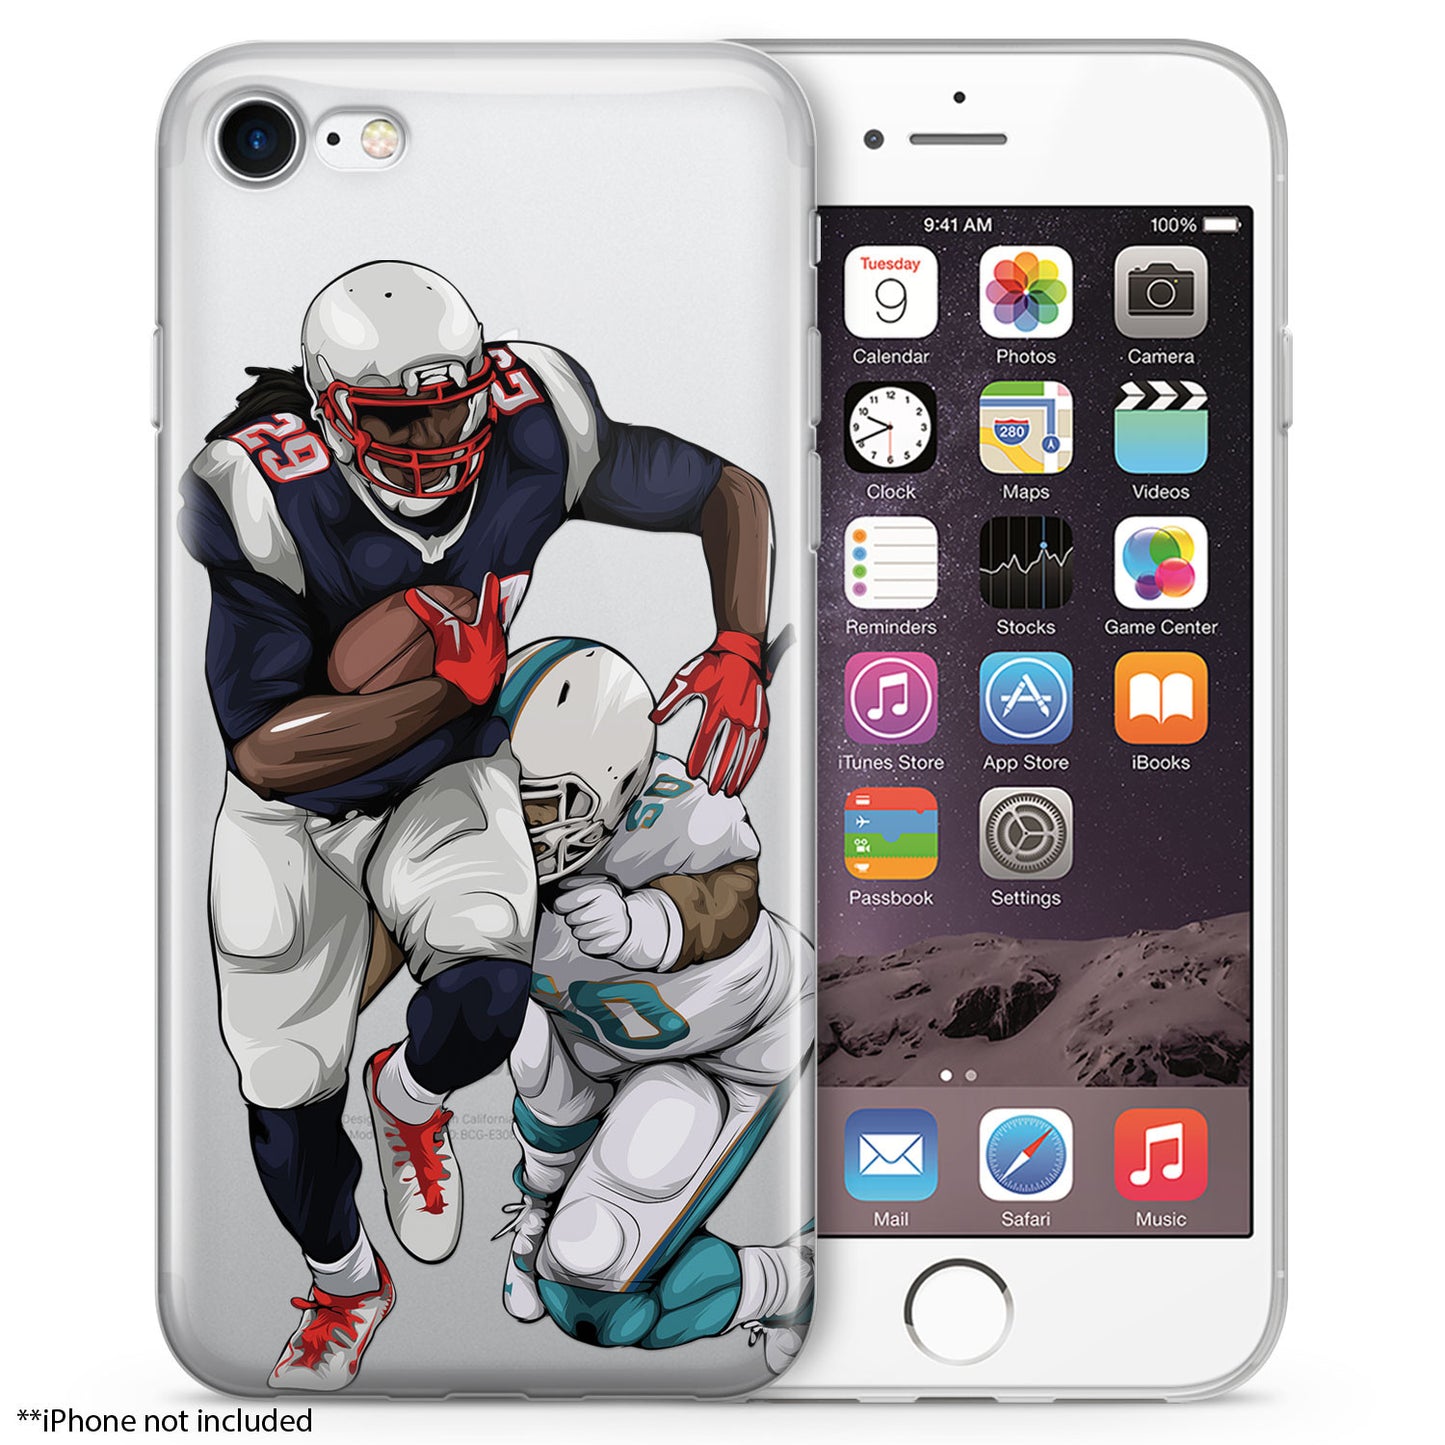 LG Football iPhone Case